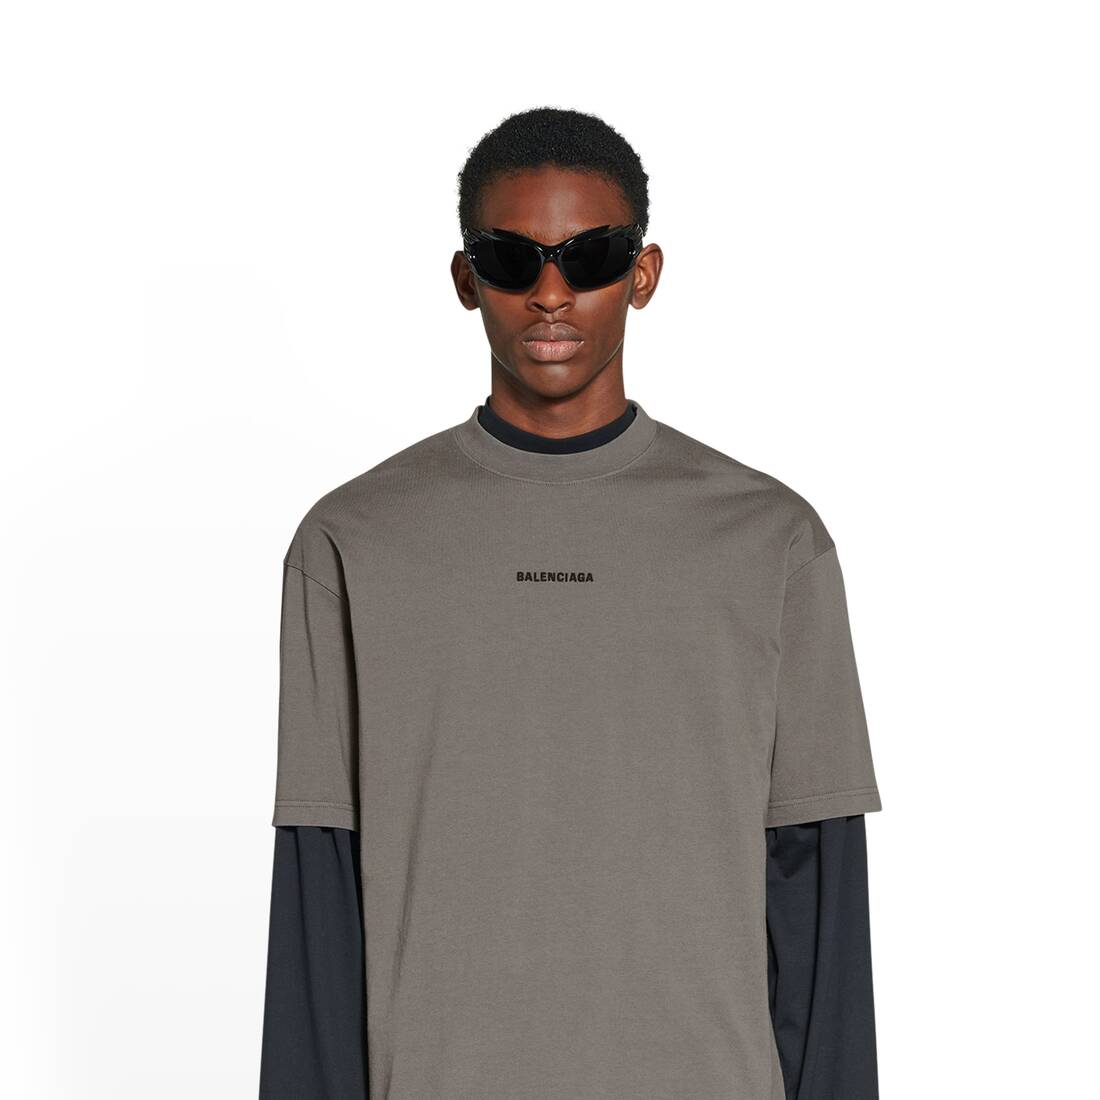 Men's Balenciaga Back T-shirt Medium Fit in Grey | Balenciaga US